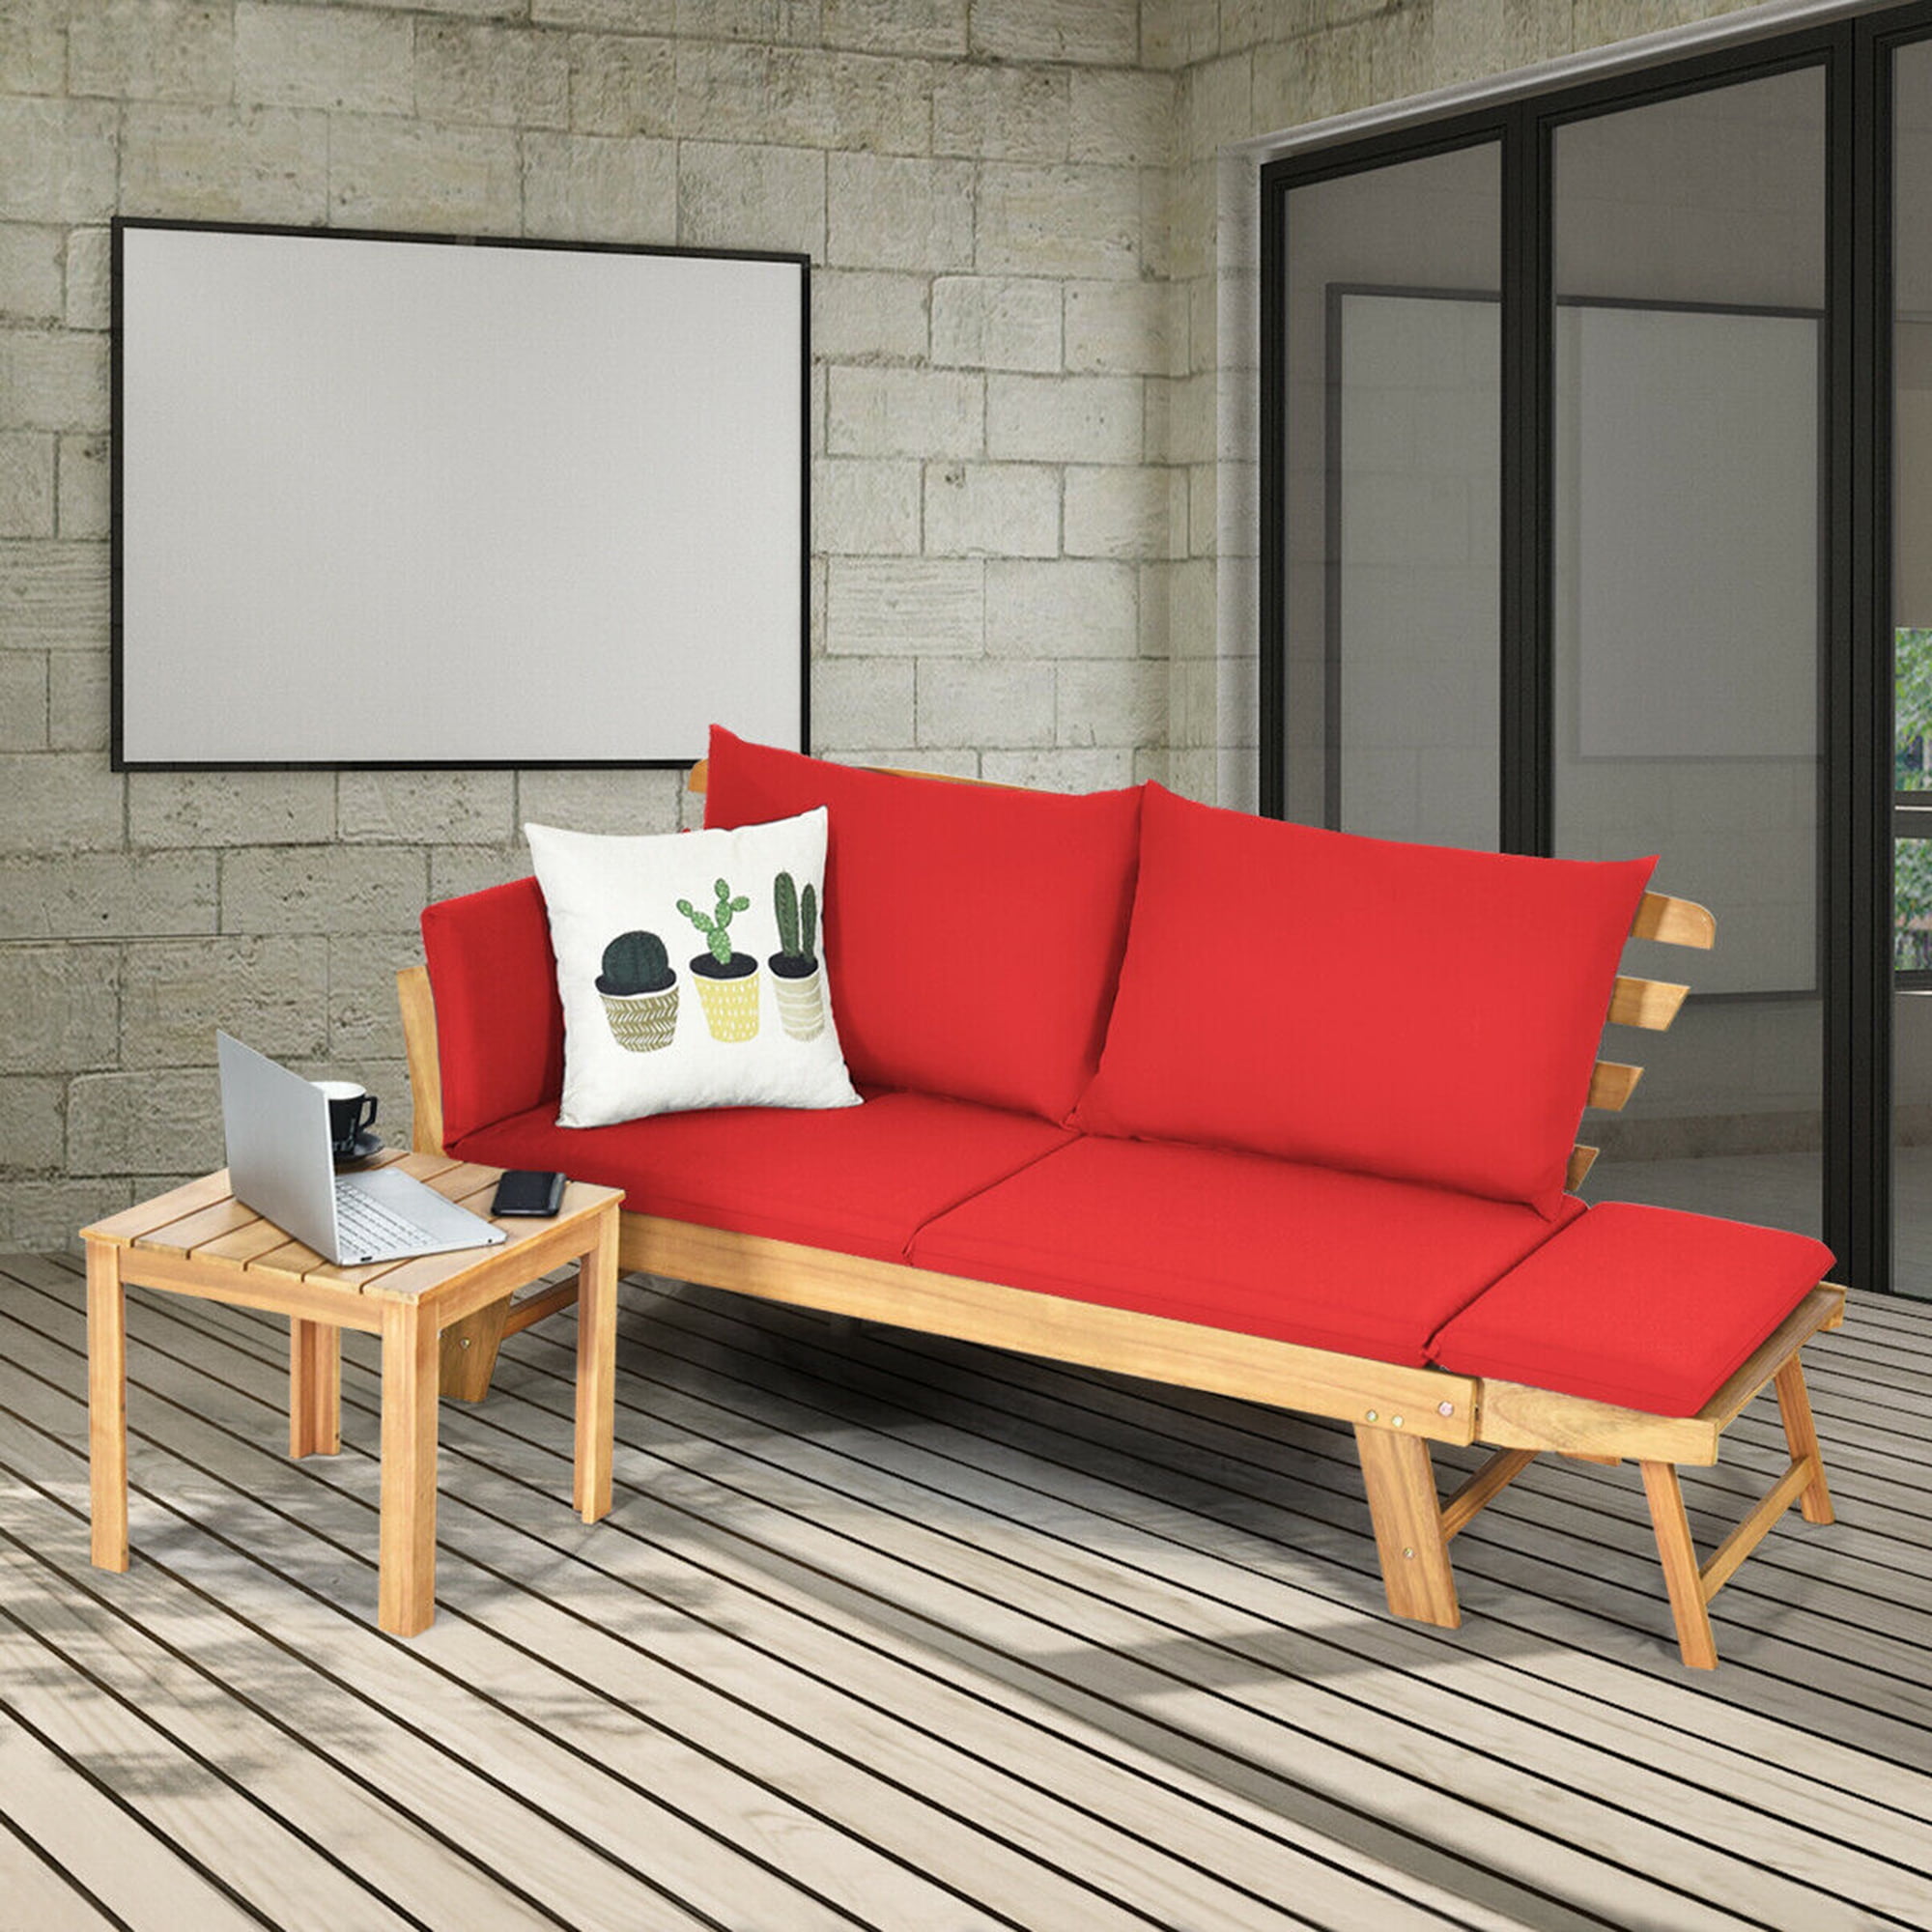 Gymax Adjustable Patio Sofa  Daybed  Acacia Wood Furniture w 